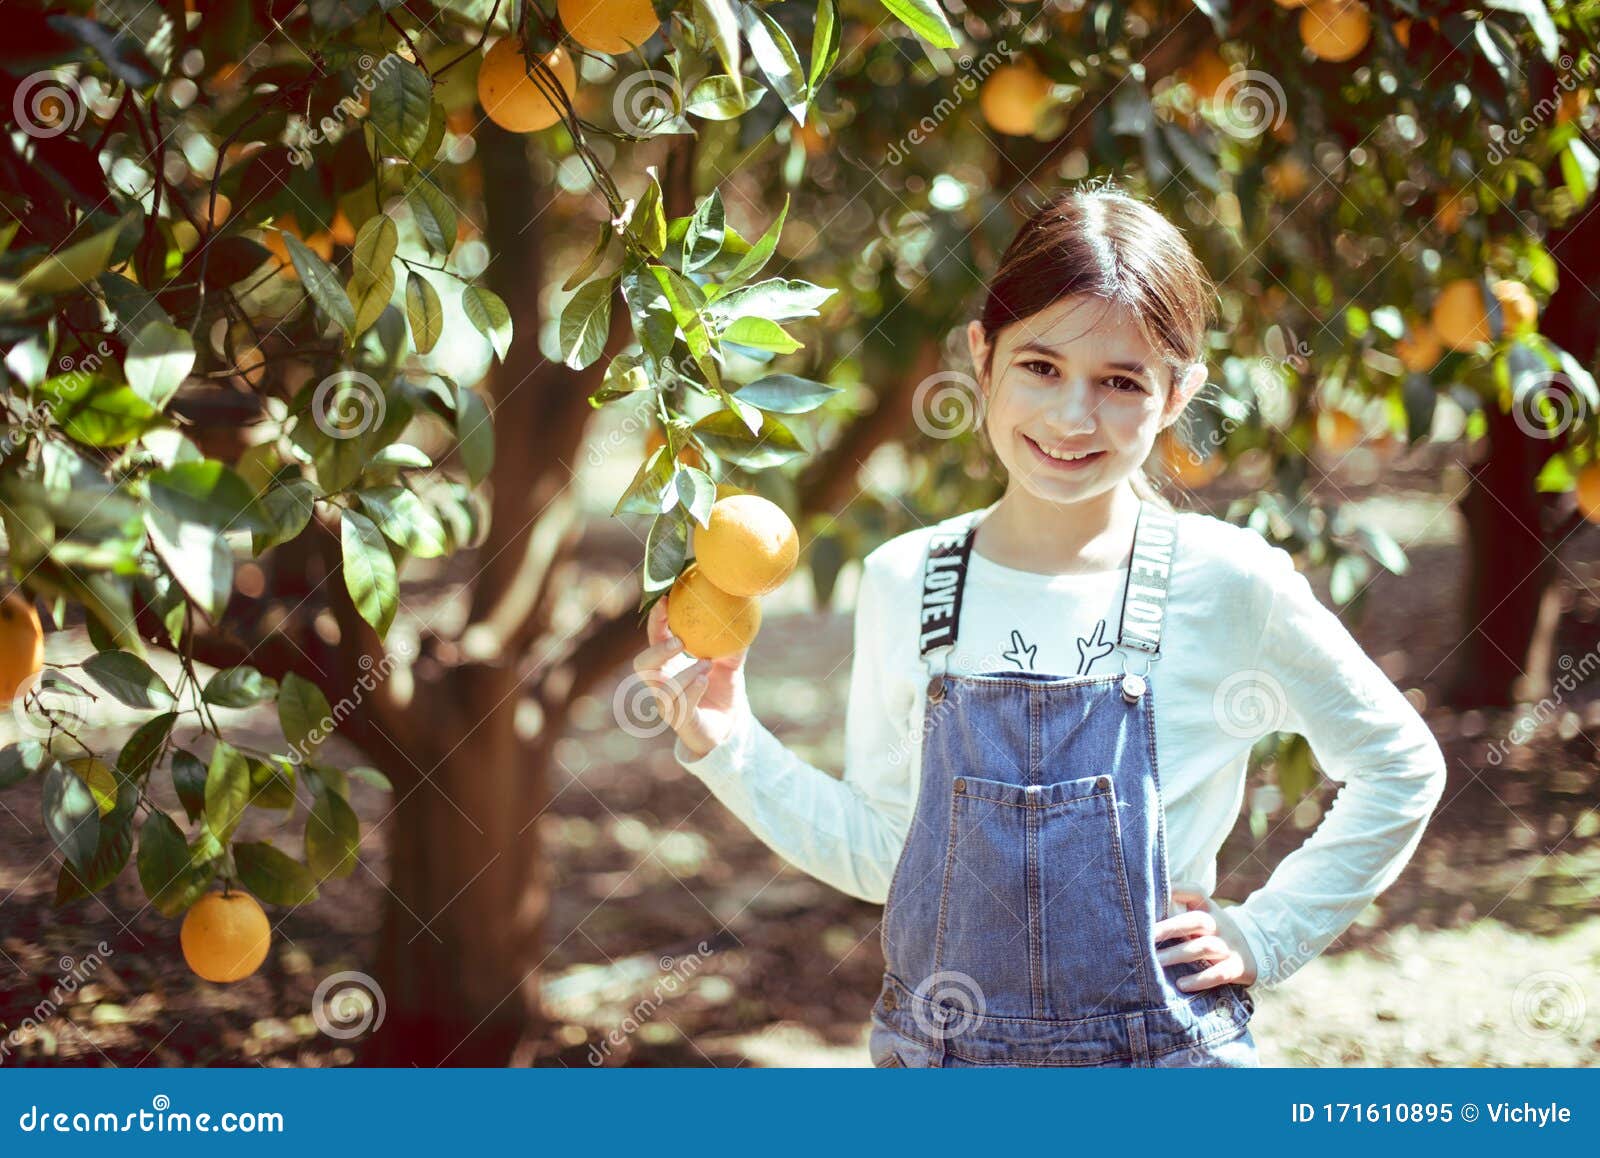 Girl and Oranges, Girl Picks Oranges, Fruit Orange Grove, Organic Farm ...